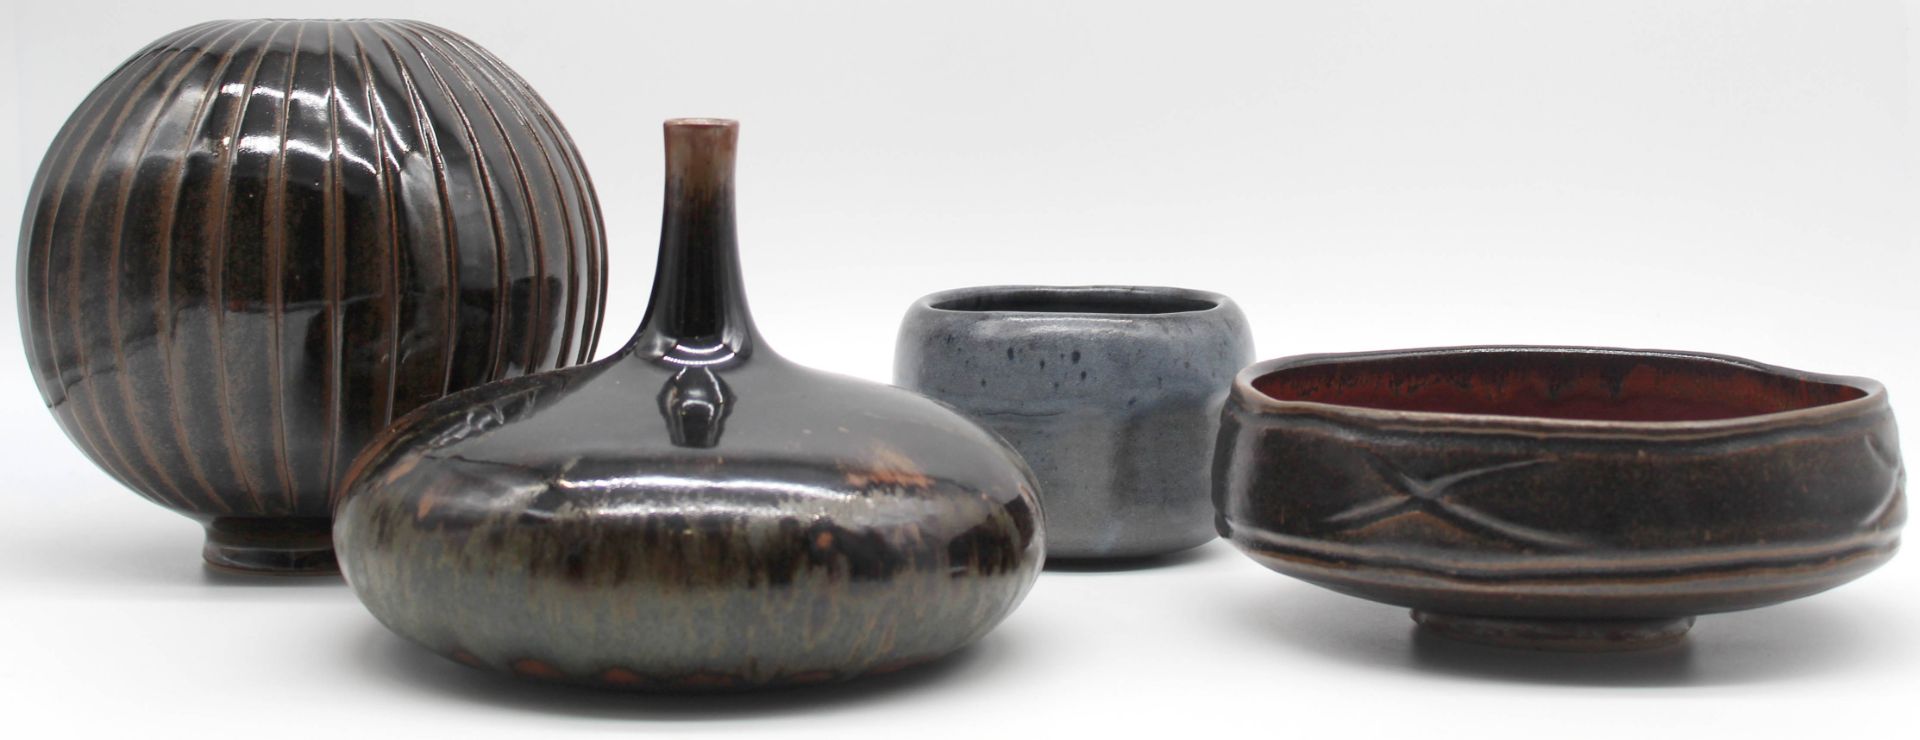 Horst KERSTAN (1941 - 2005). 3 objects stoneware / ceramic glazed.